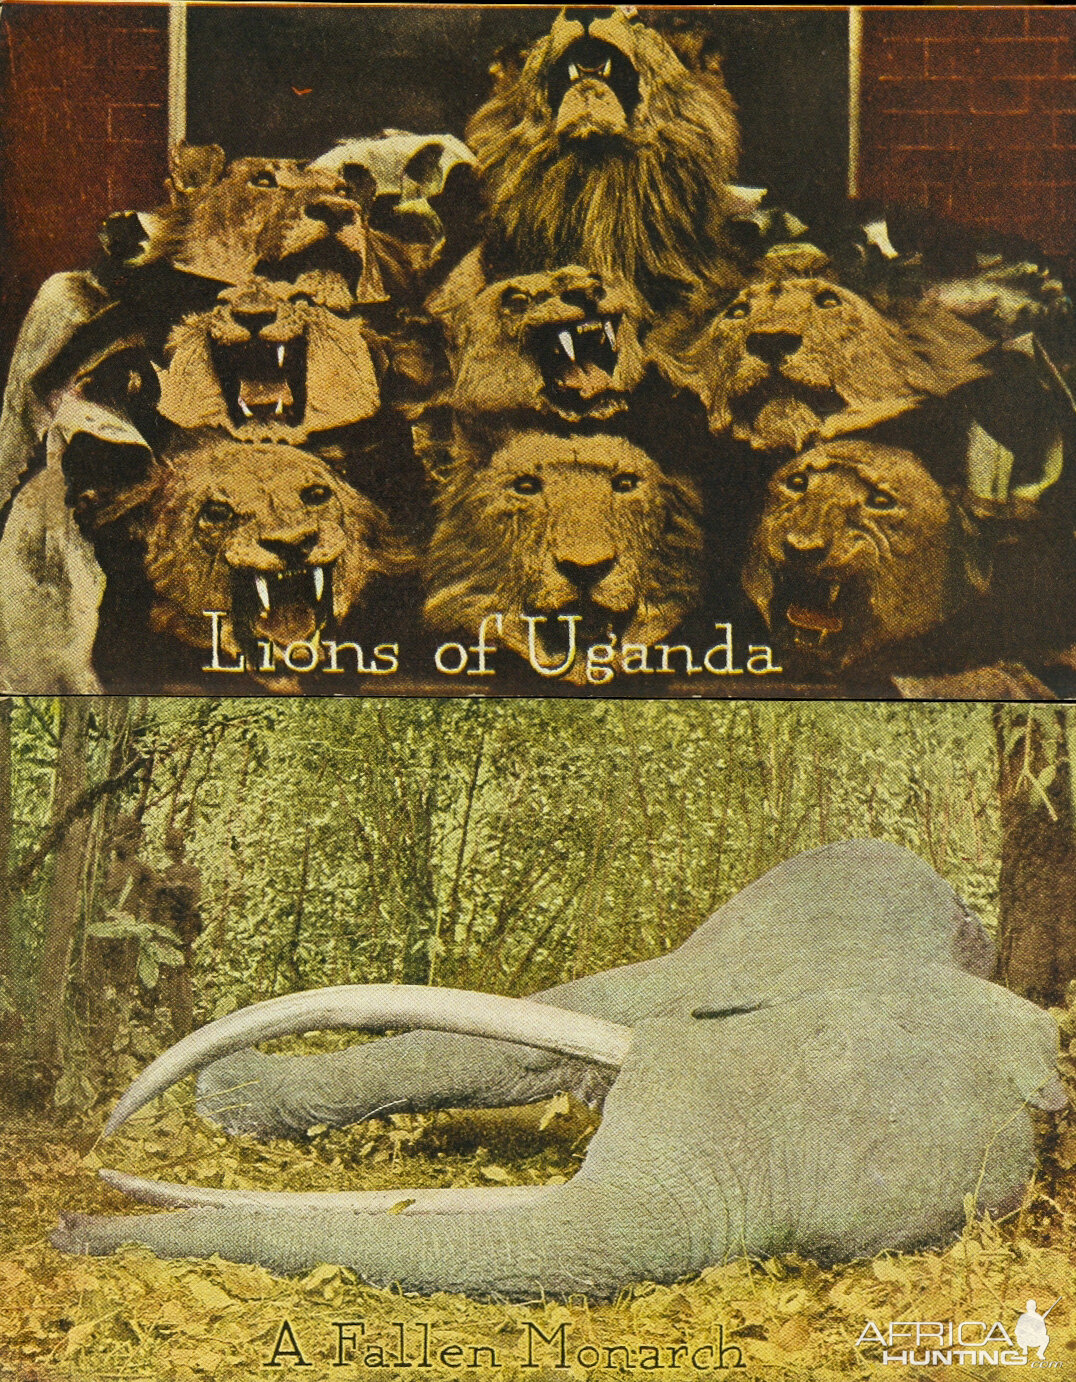 Lion of Uganda and a fallen Monarch